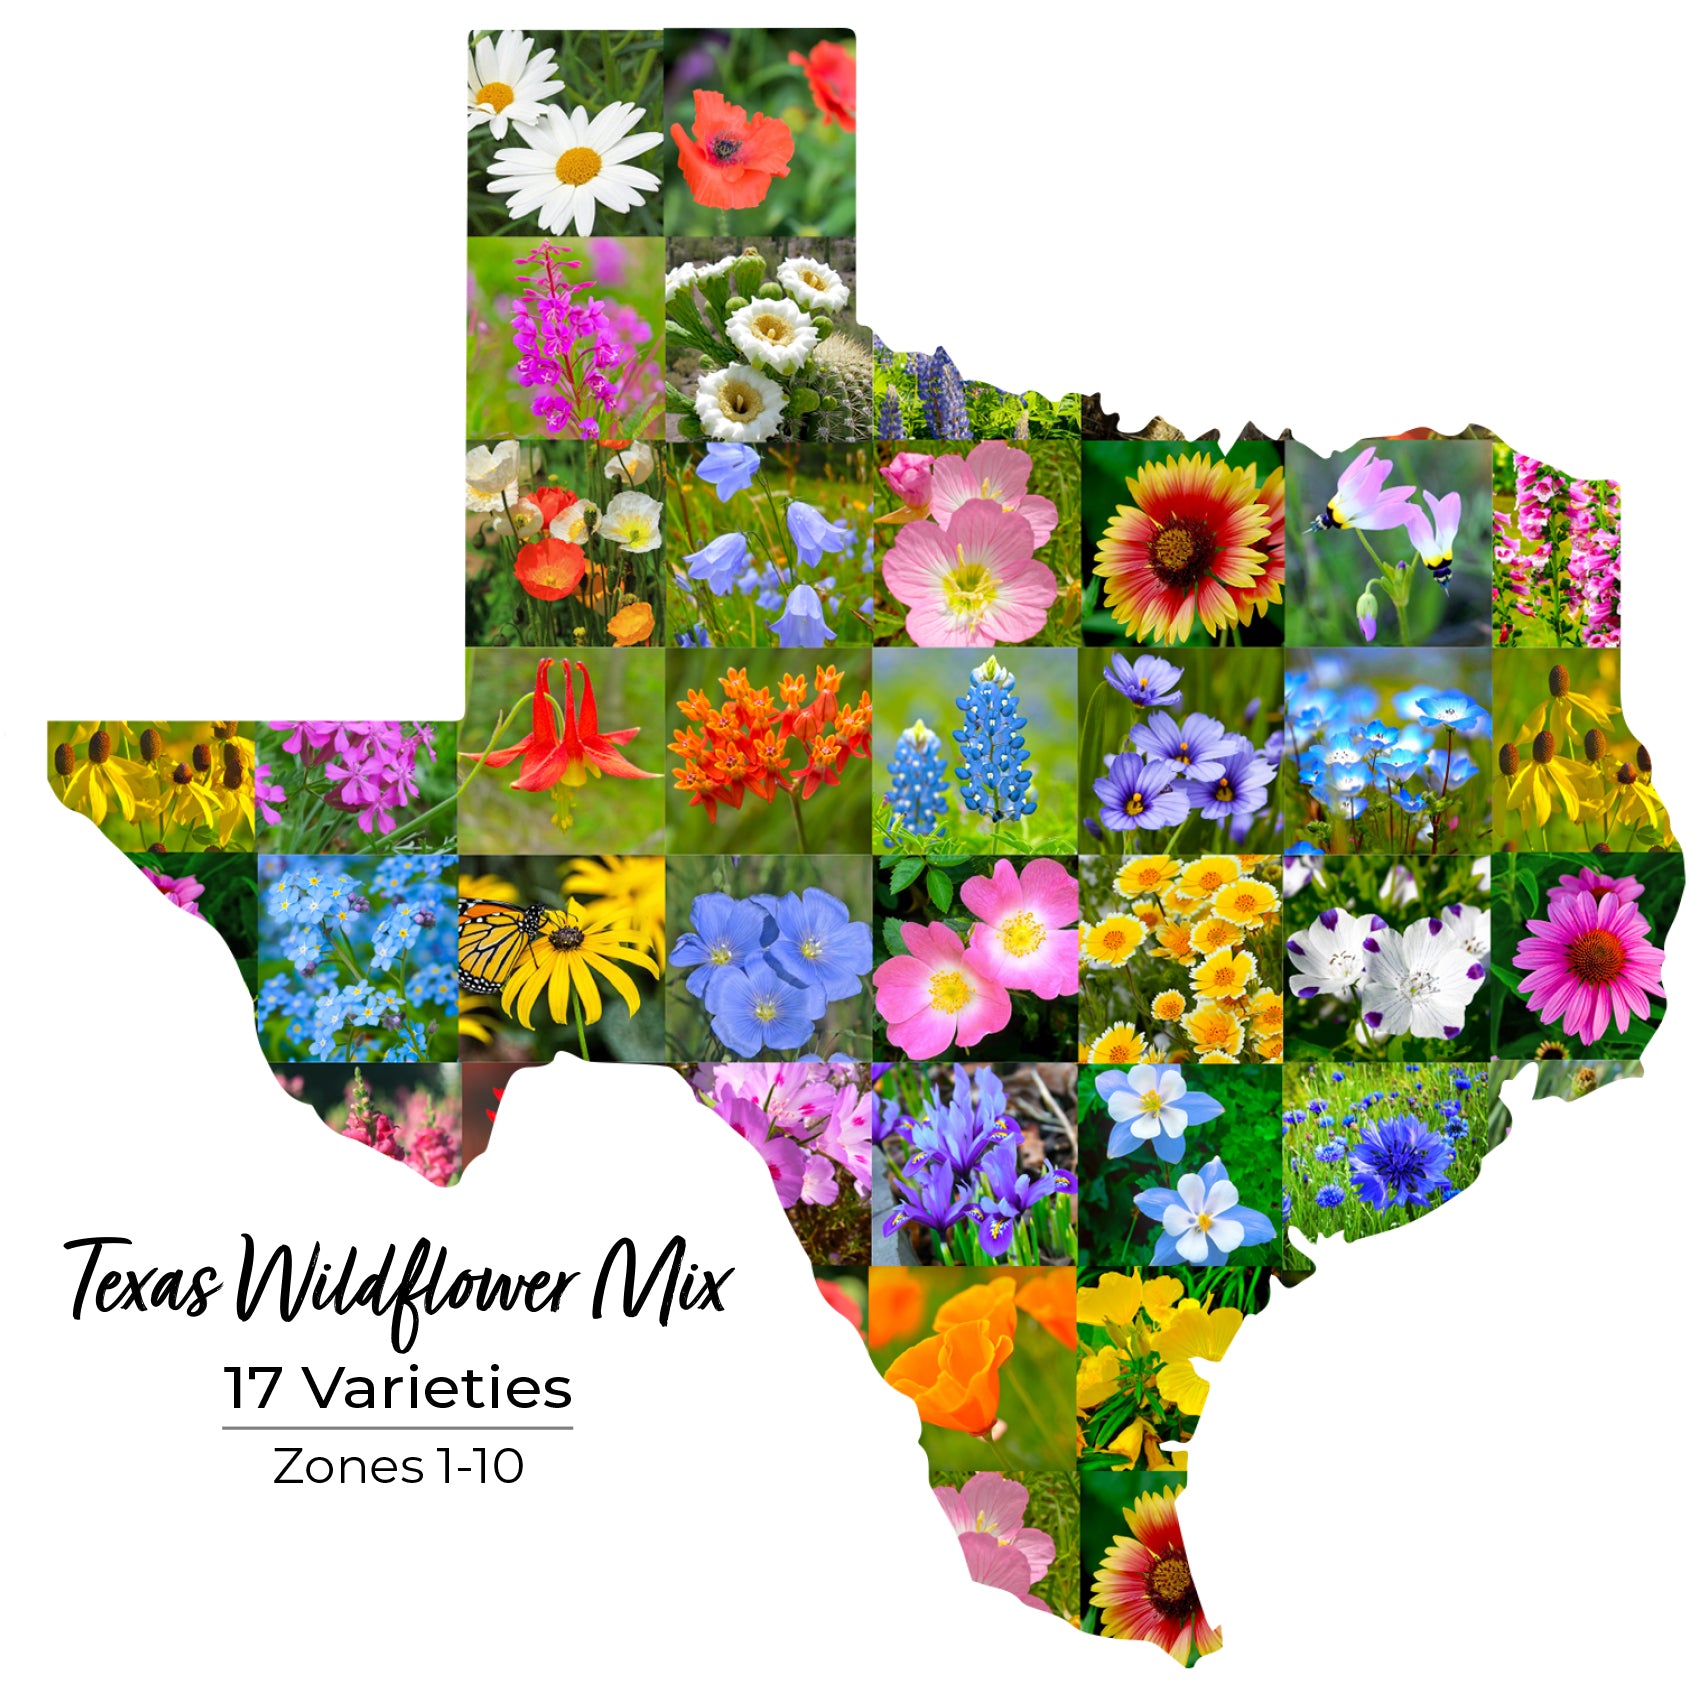 Texas wildflower mix